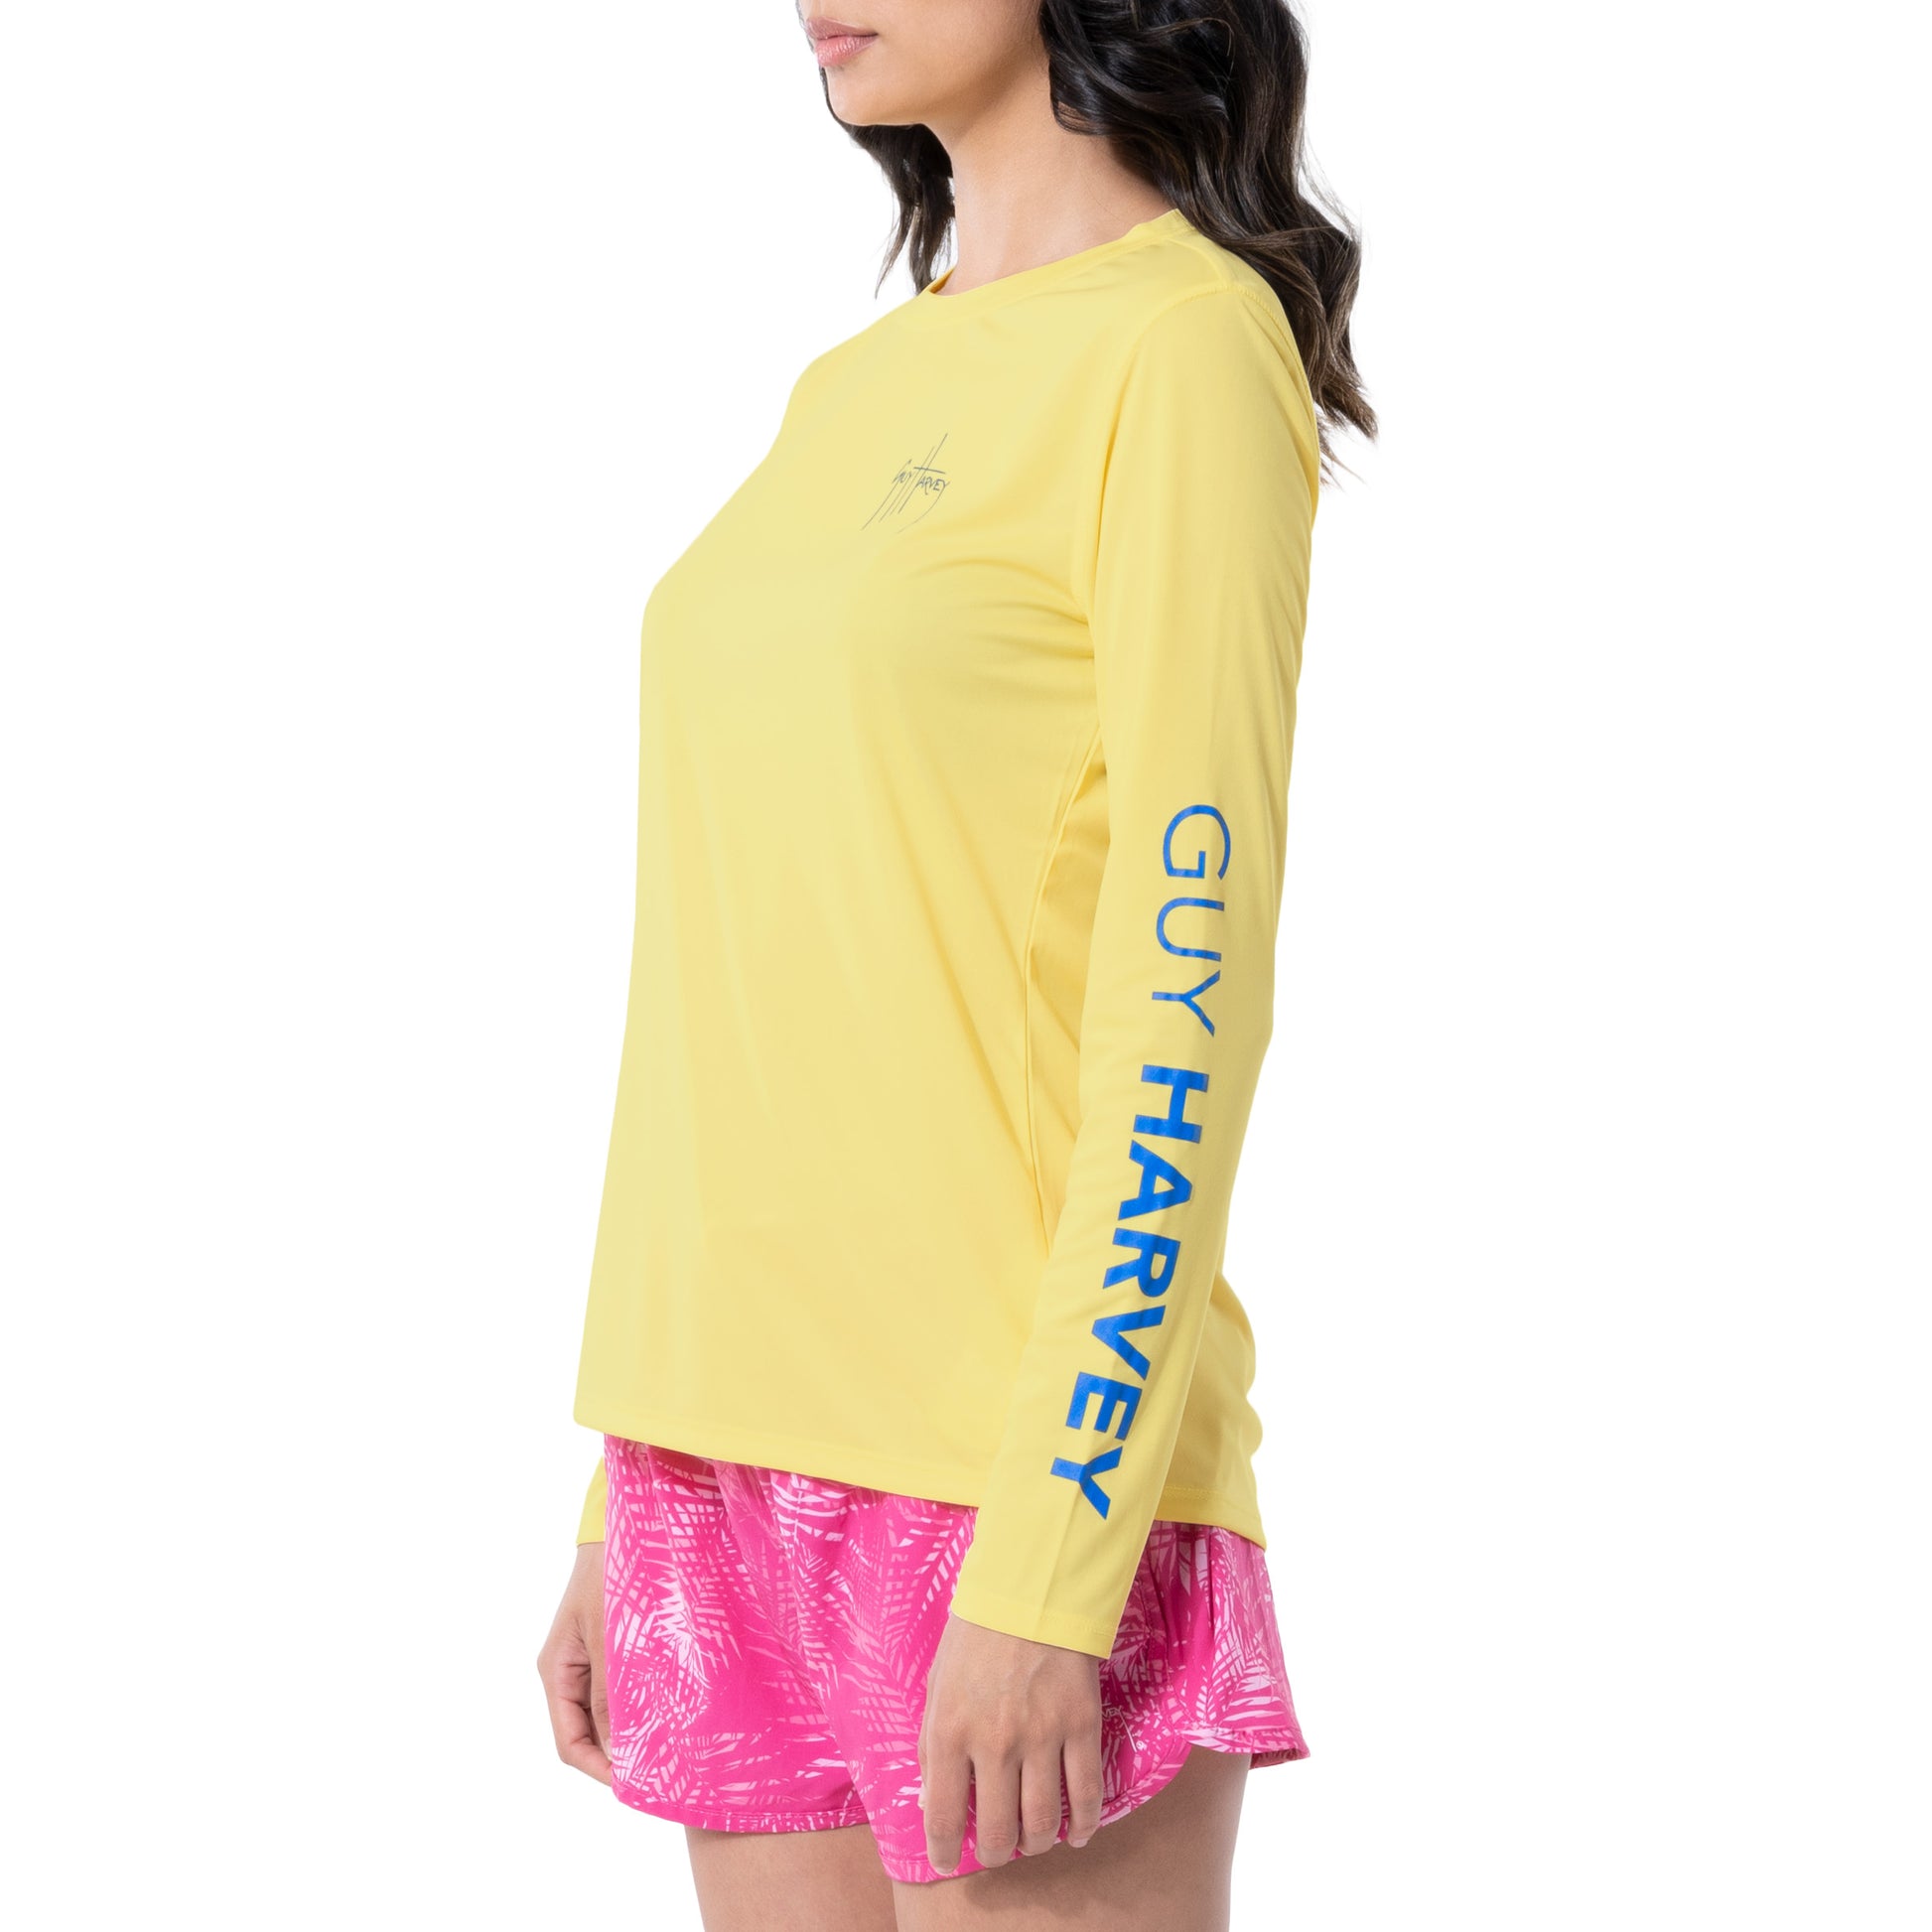 Ladies Long Sleeve Performance Fishing Sun Protection Shirt UPF 50+ View 28